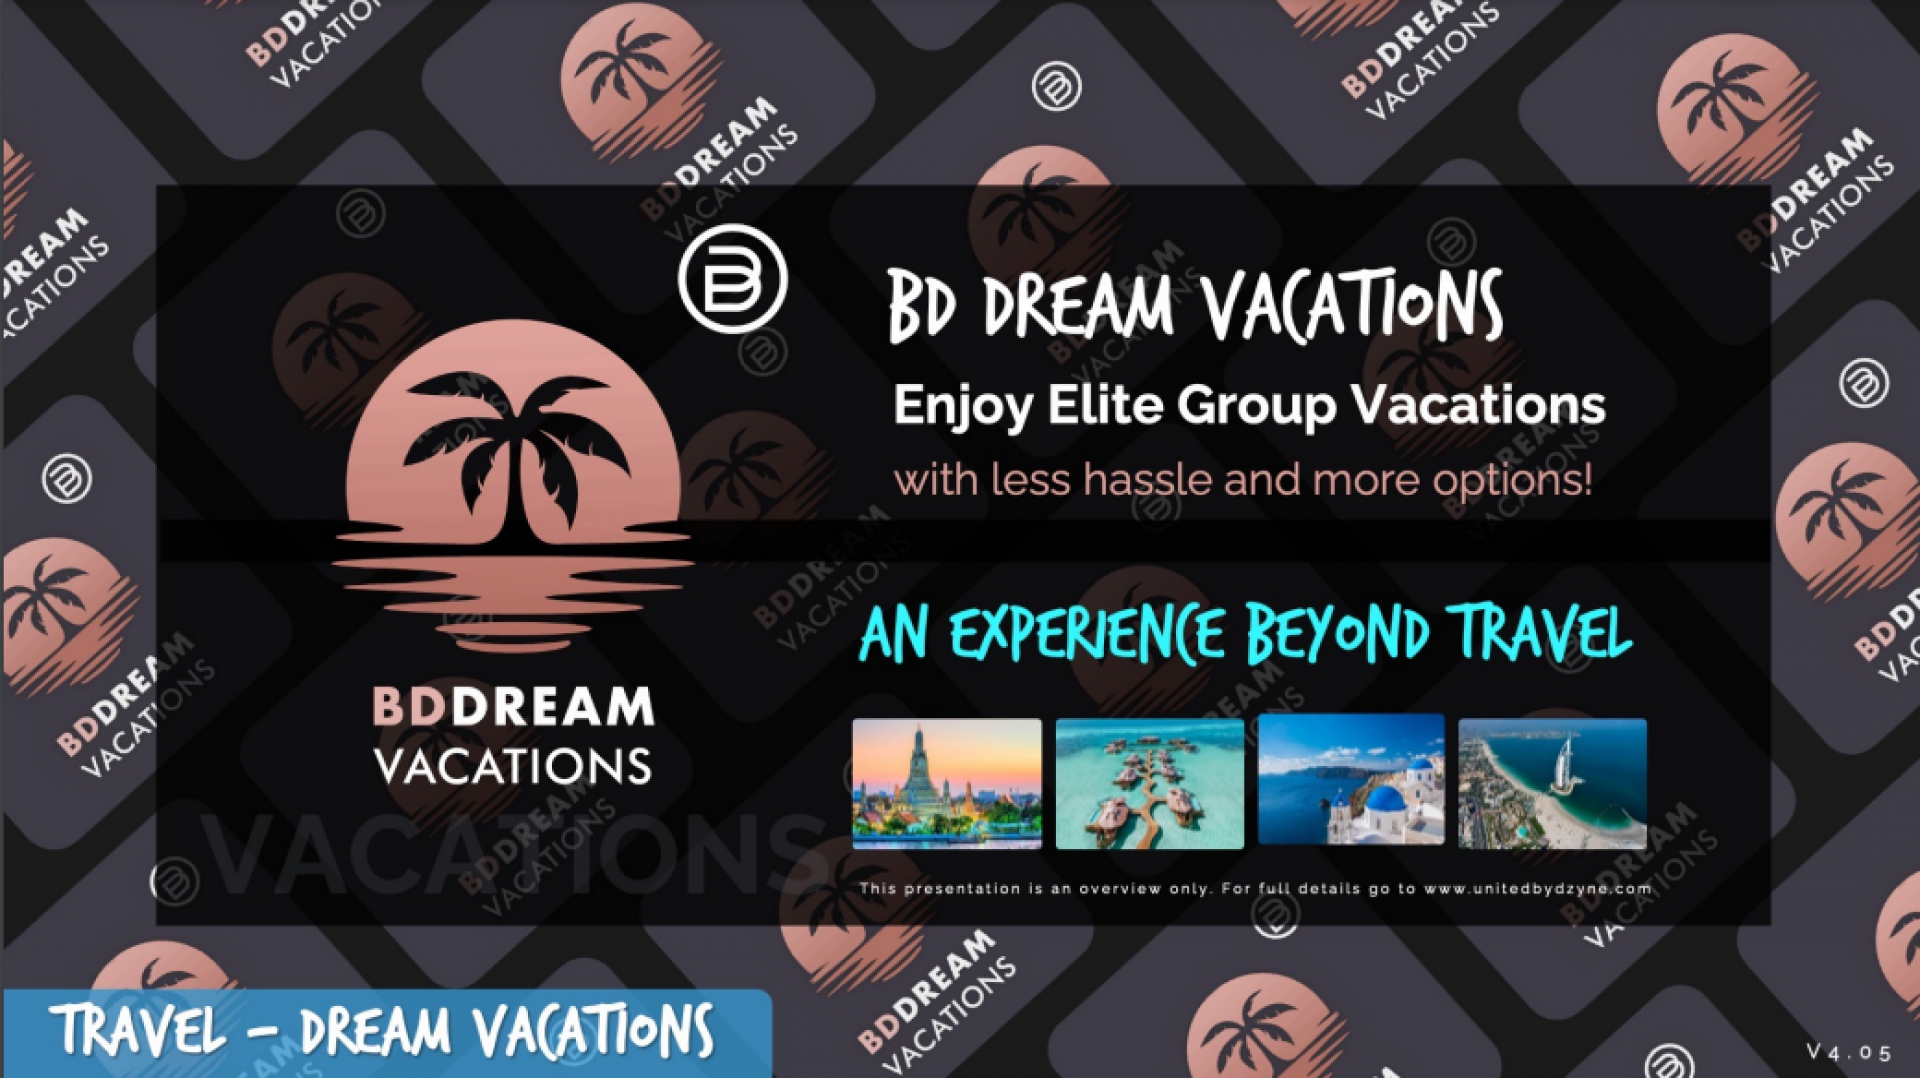 Vega Digital Awards Winner - Marketing Campaign - BD Dream Vacations, ByDzyne Inc.